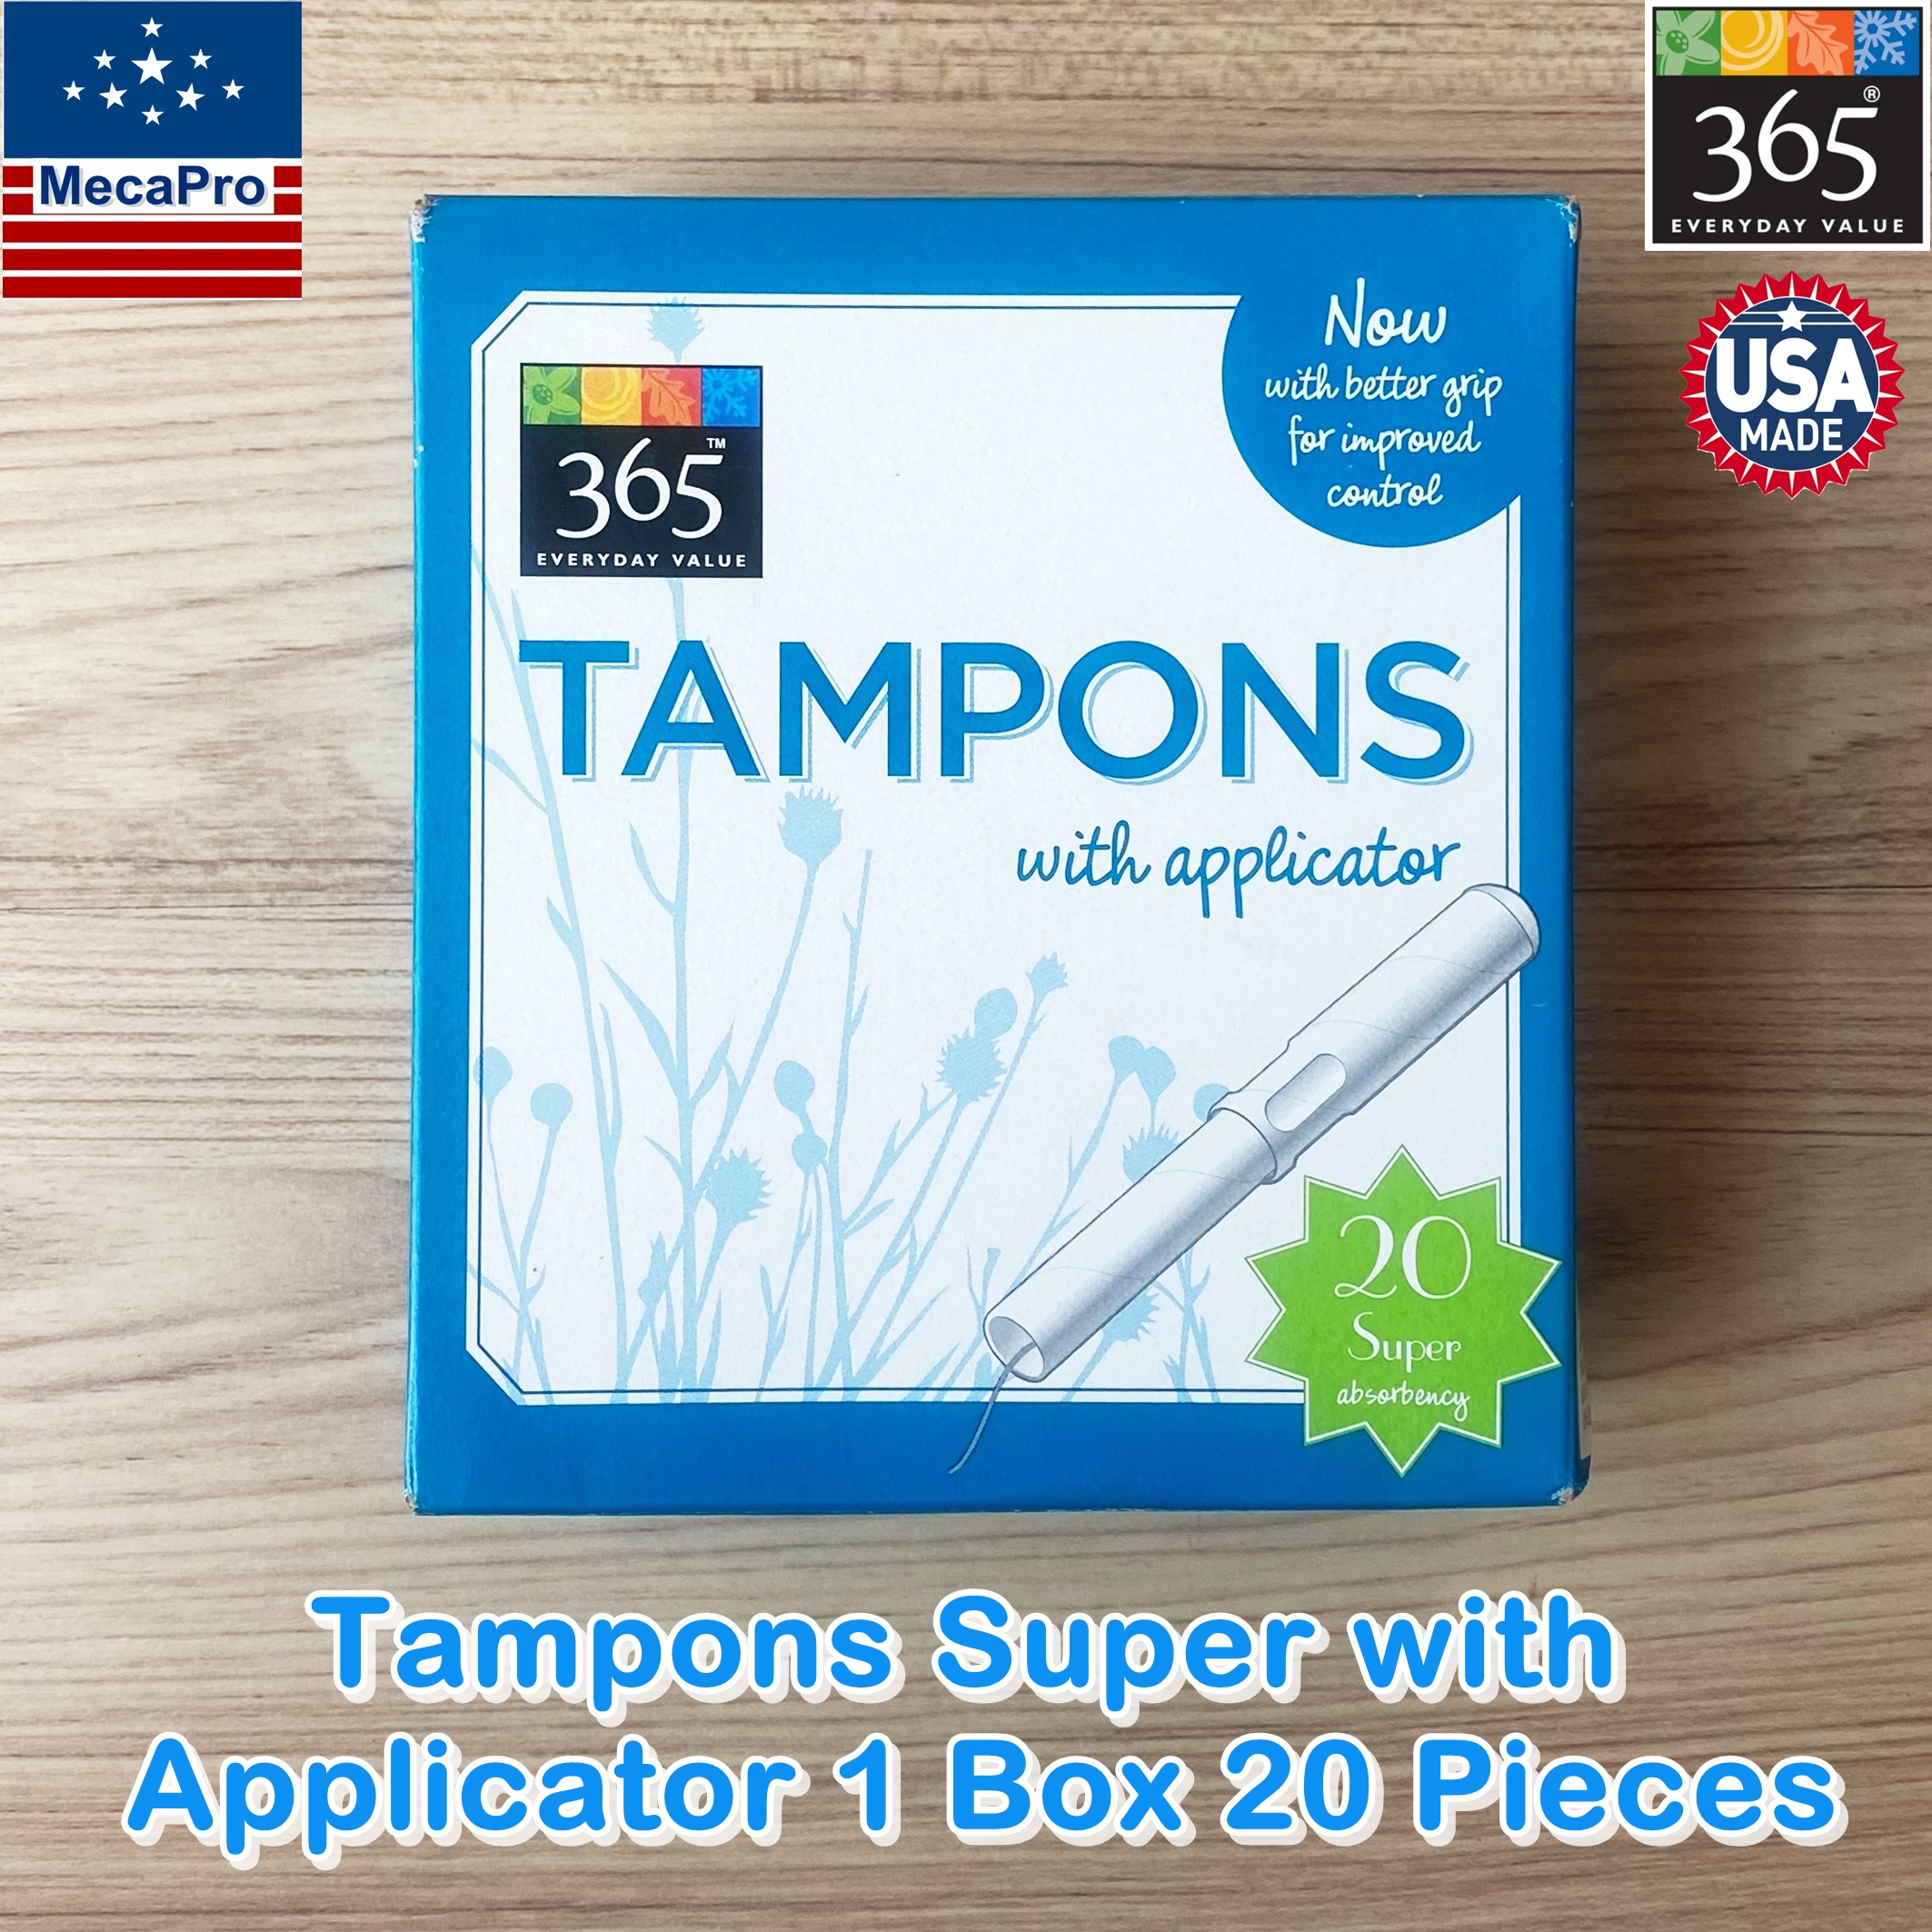 365 Everyday Value® Tampons Super with Applicator 1 Box 20 Pieces ผ้าอนามัยแบบสอด 1 กล่อง 20 ชิ้น เหมาะกับวันมาปกติ-มามาก